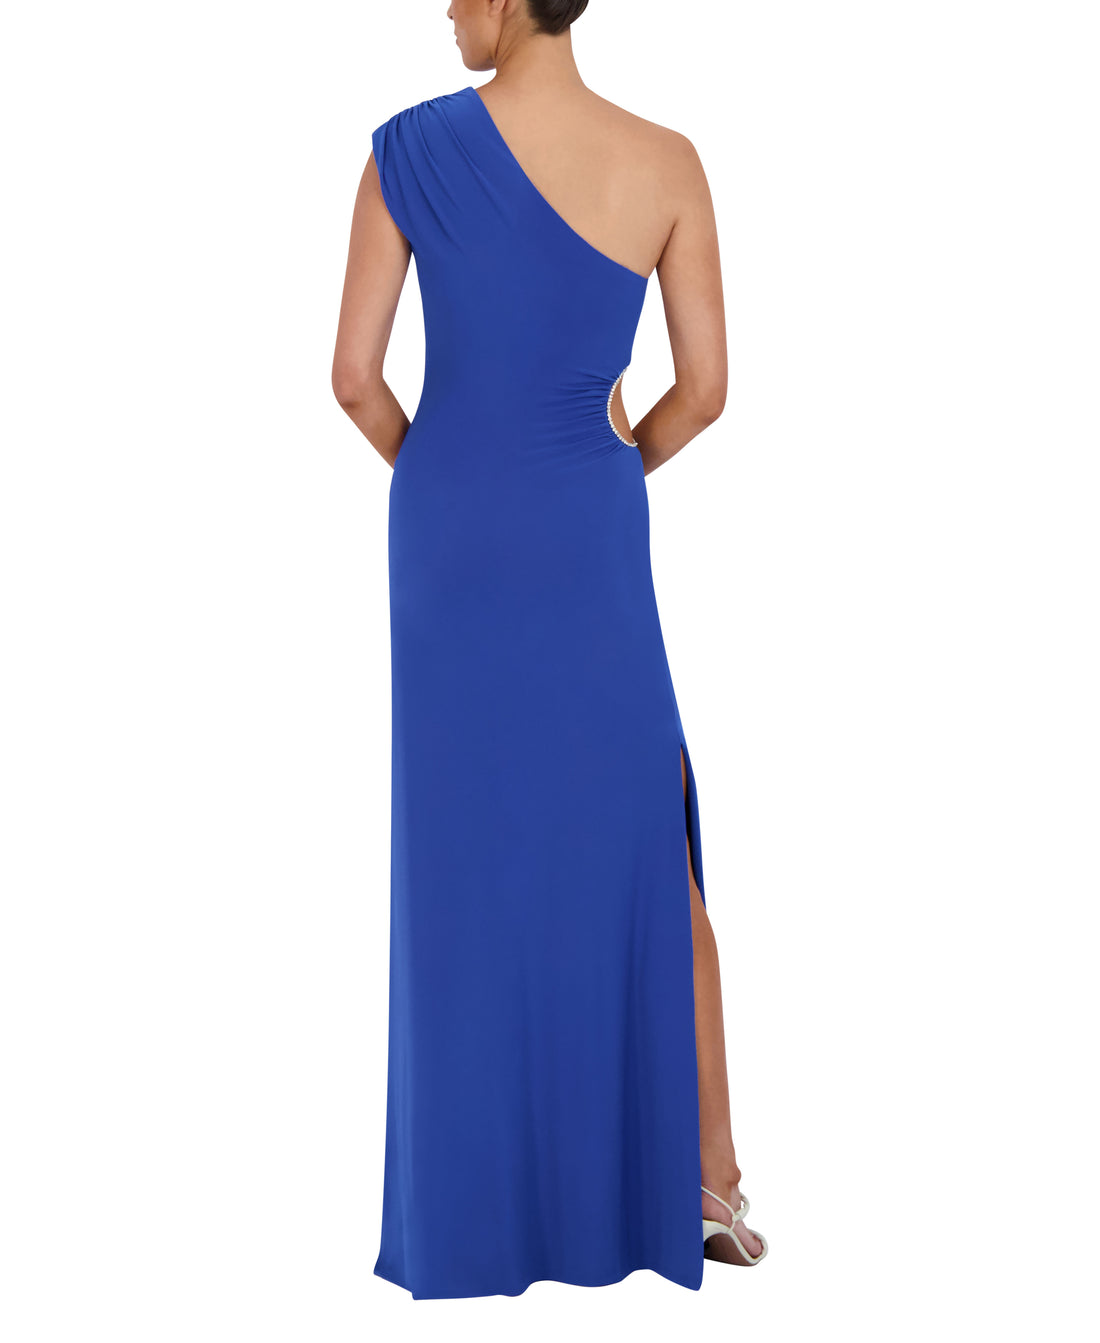 blue-assymmetric-neck-long-dress-with-side-slit_mxx1d32_blue_02